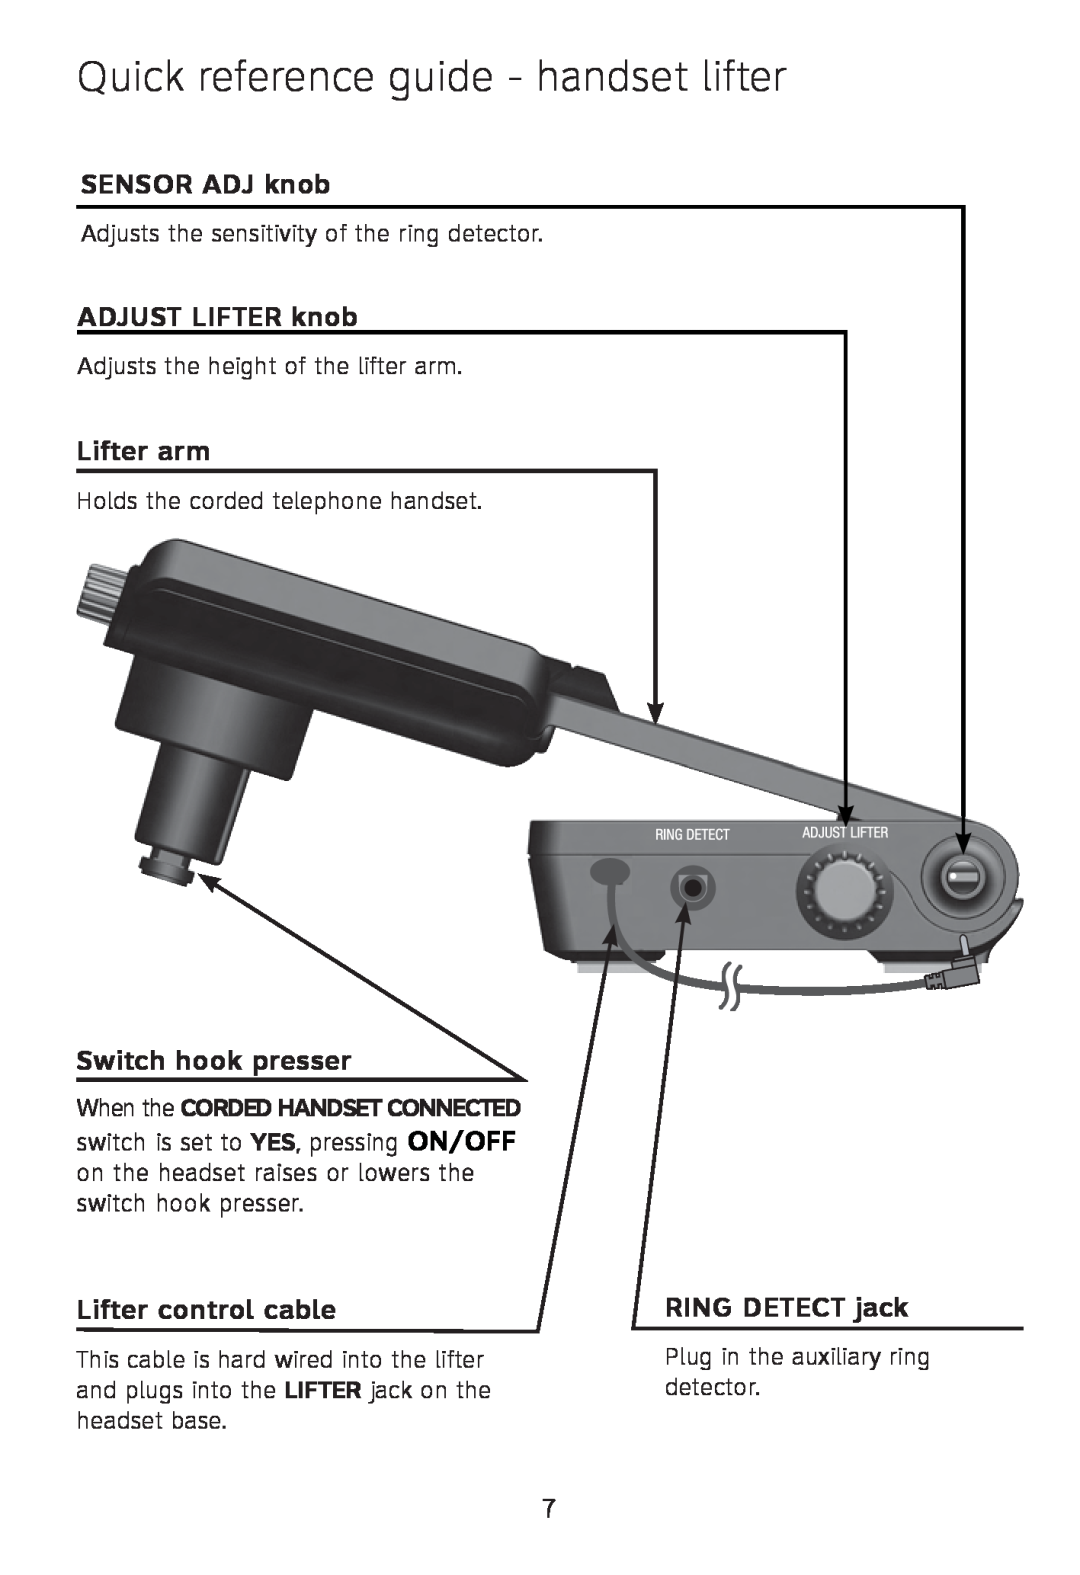 AT&T TL7612 Quick reference guide - handset lifter, SENSOR ADJ knob, ADJUST LIFTER knob, Lifter arm, Switch hook presser 